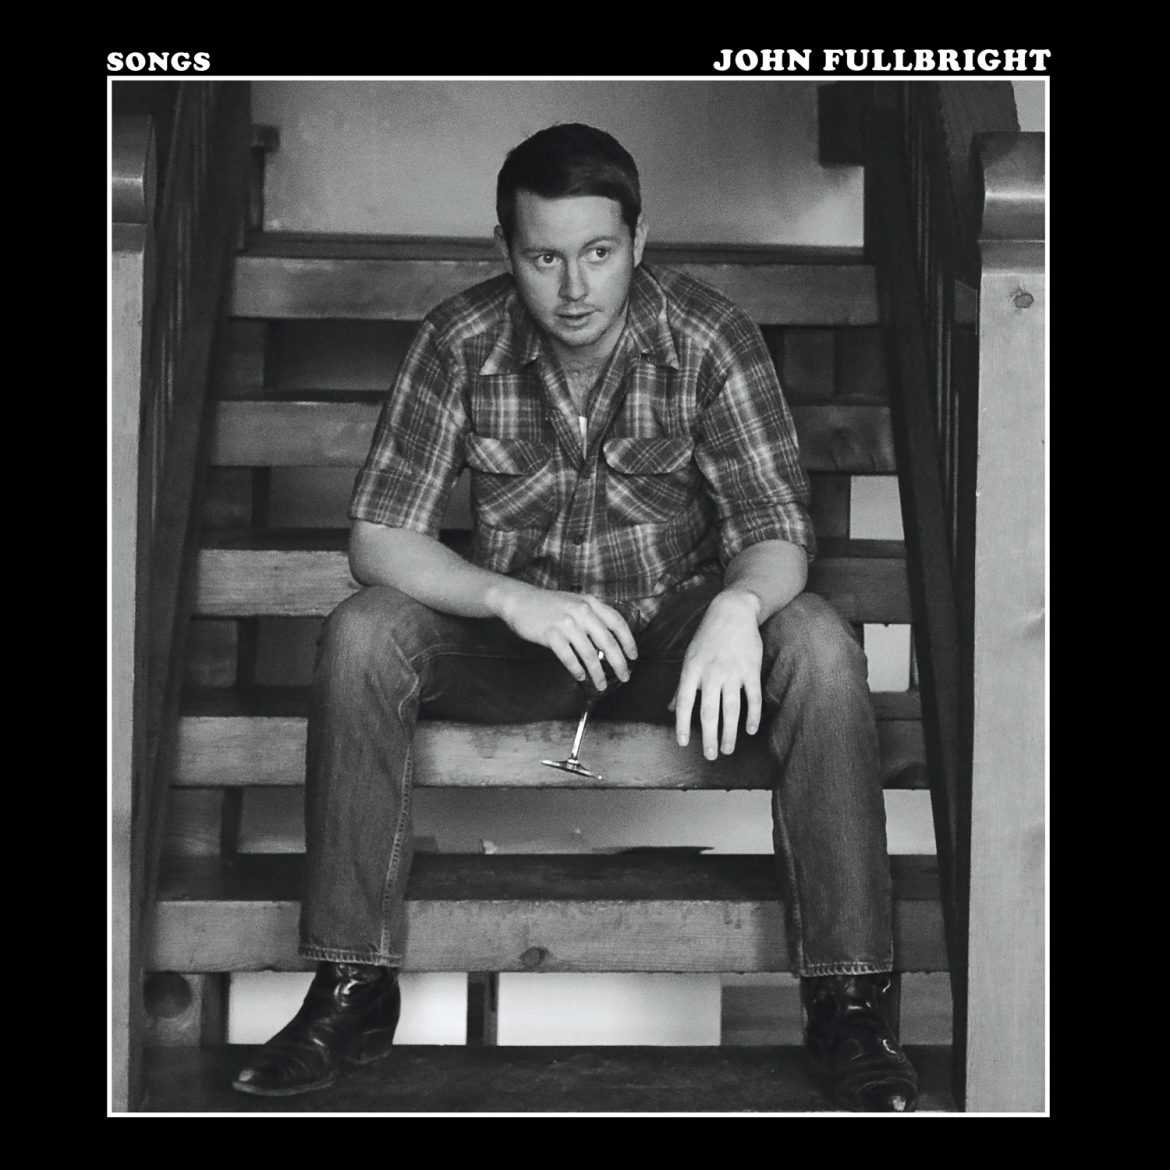 John Fullbright “Songs”, nuevo disco